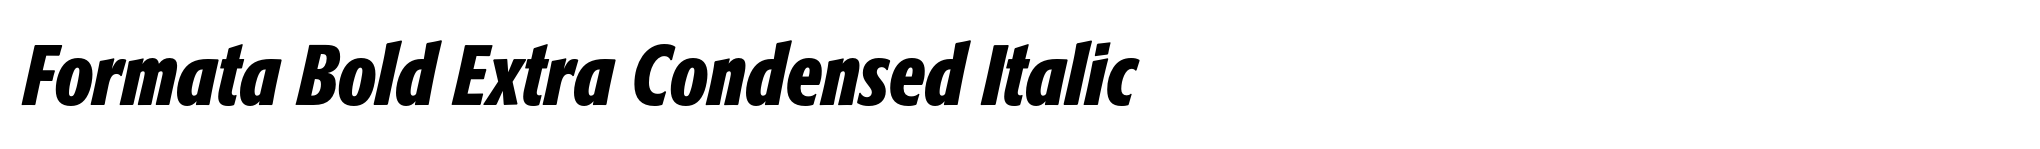 Formata Bold Extra Condensed Italic image